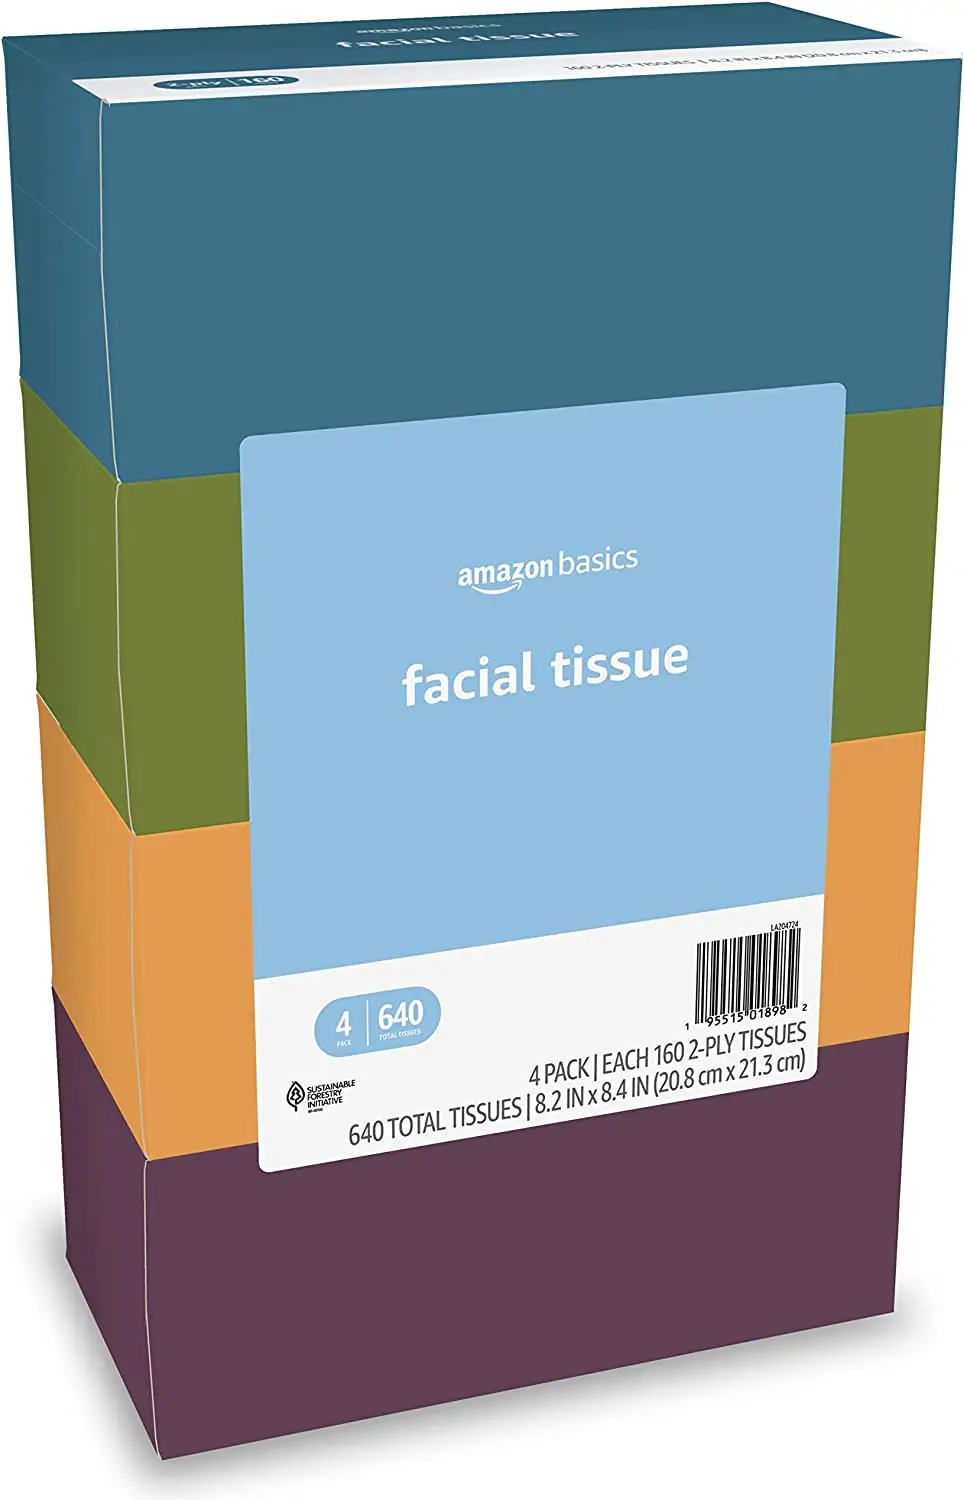 Amazon Basics Facial Tissue, 4 Flat Boxes, 160 Tissues per Box